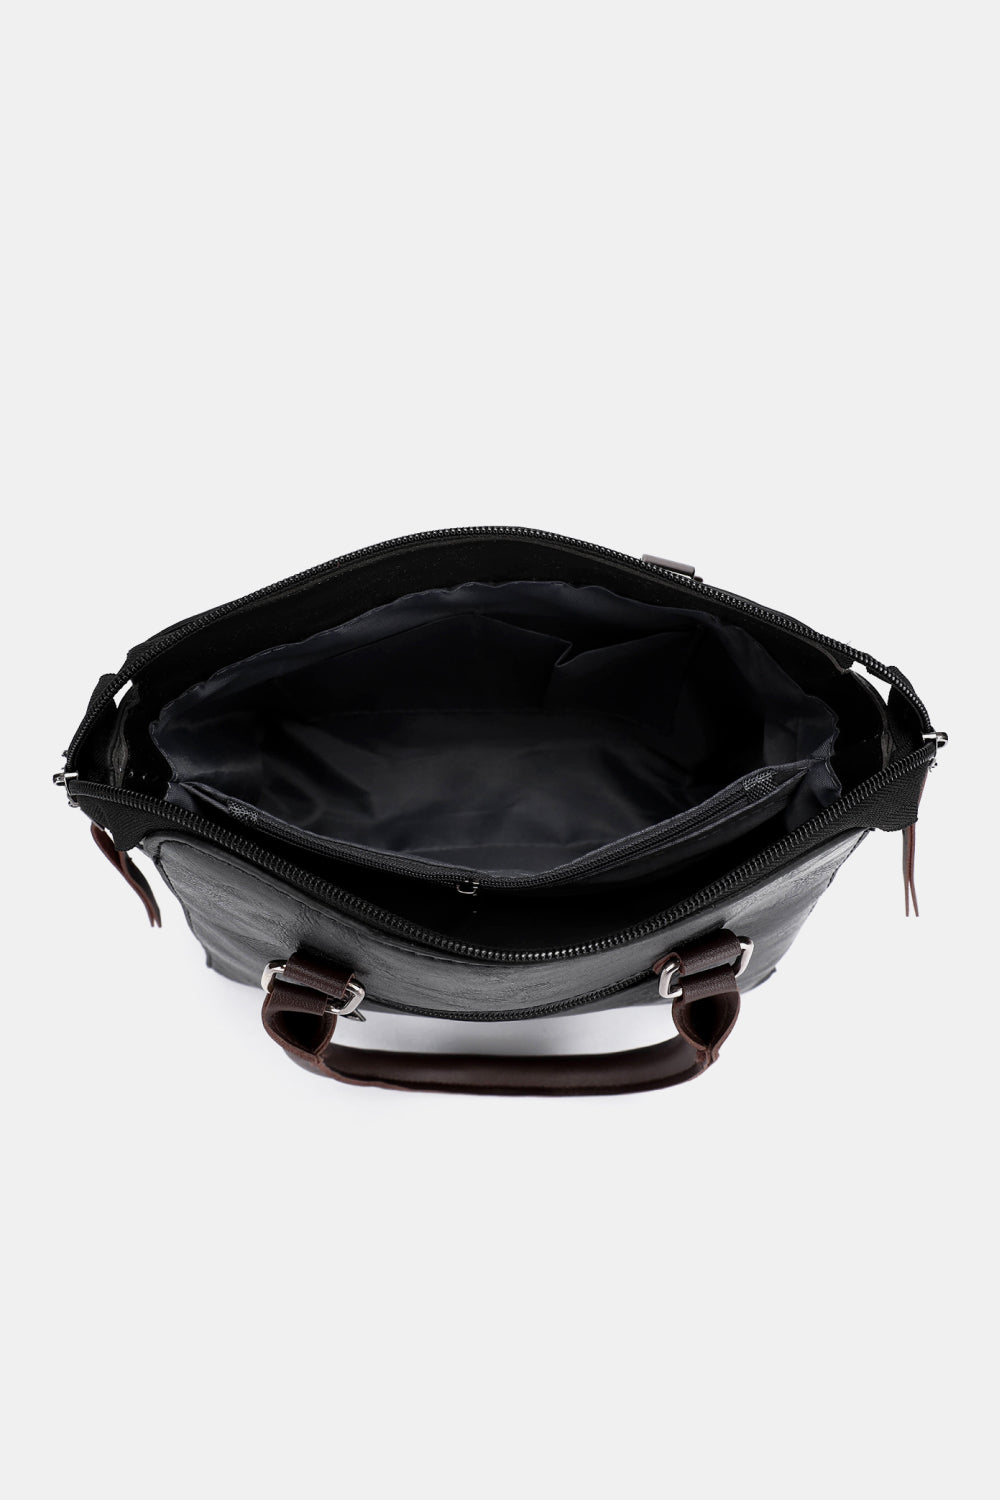 PREORDER- 4-Piece PU Leather Bag Set